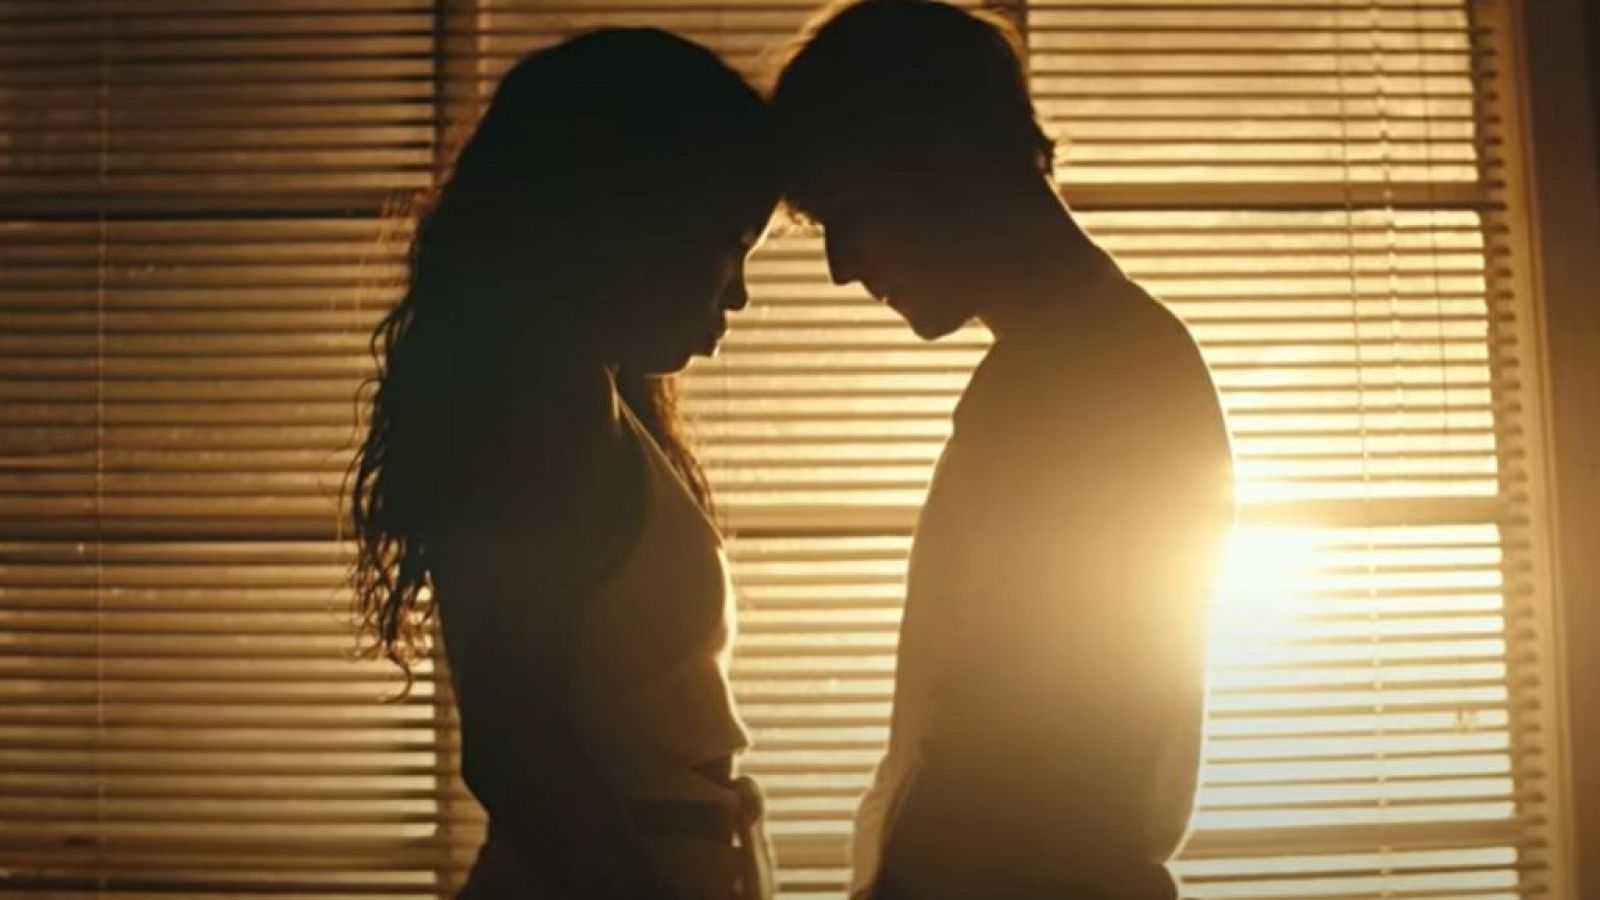 Fotograma del videoclip "Holy", de Justin Bieber